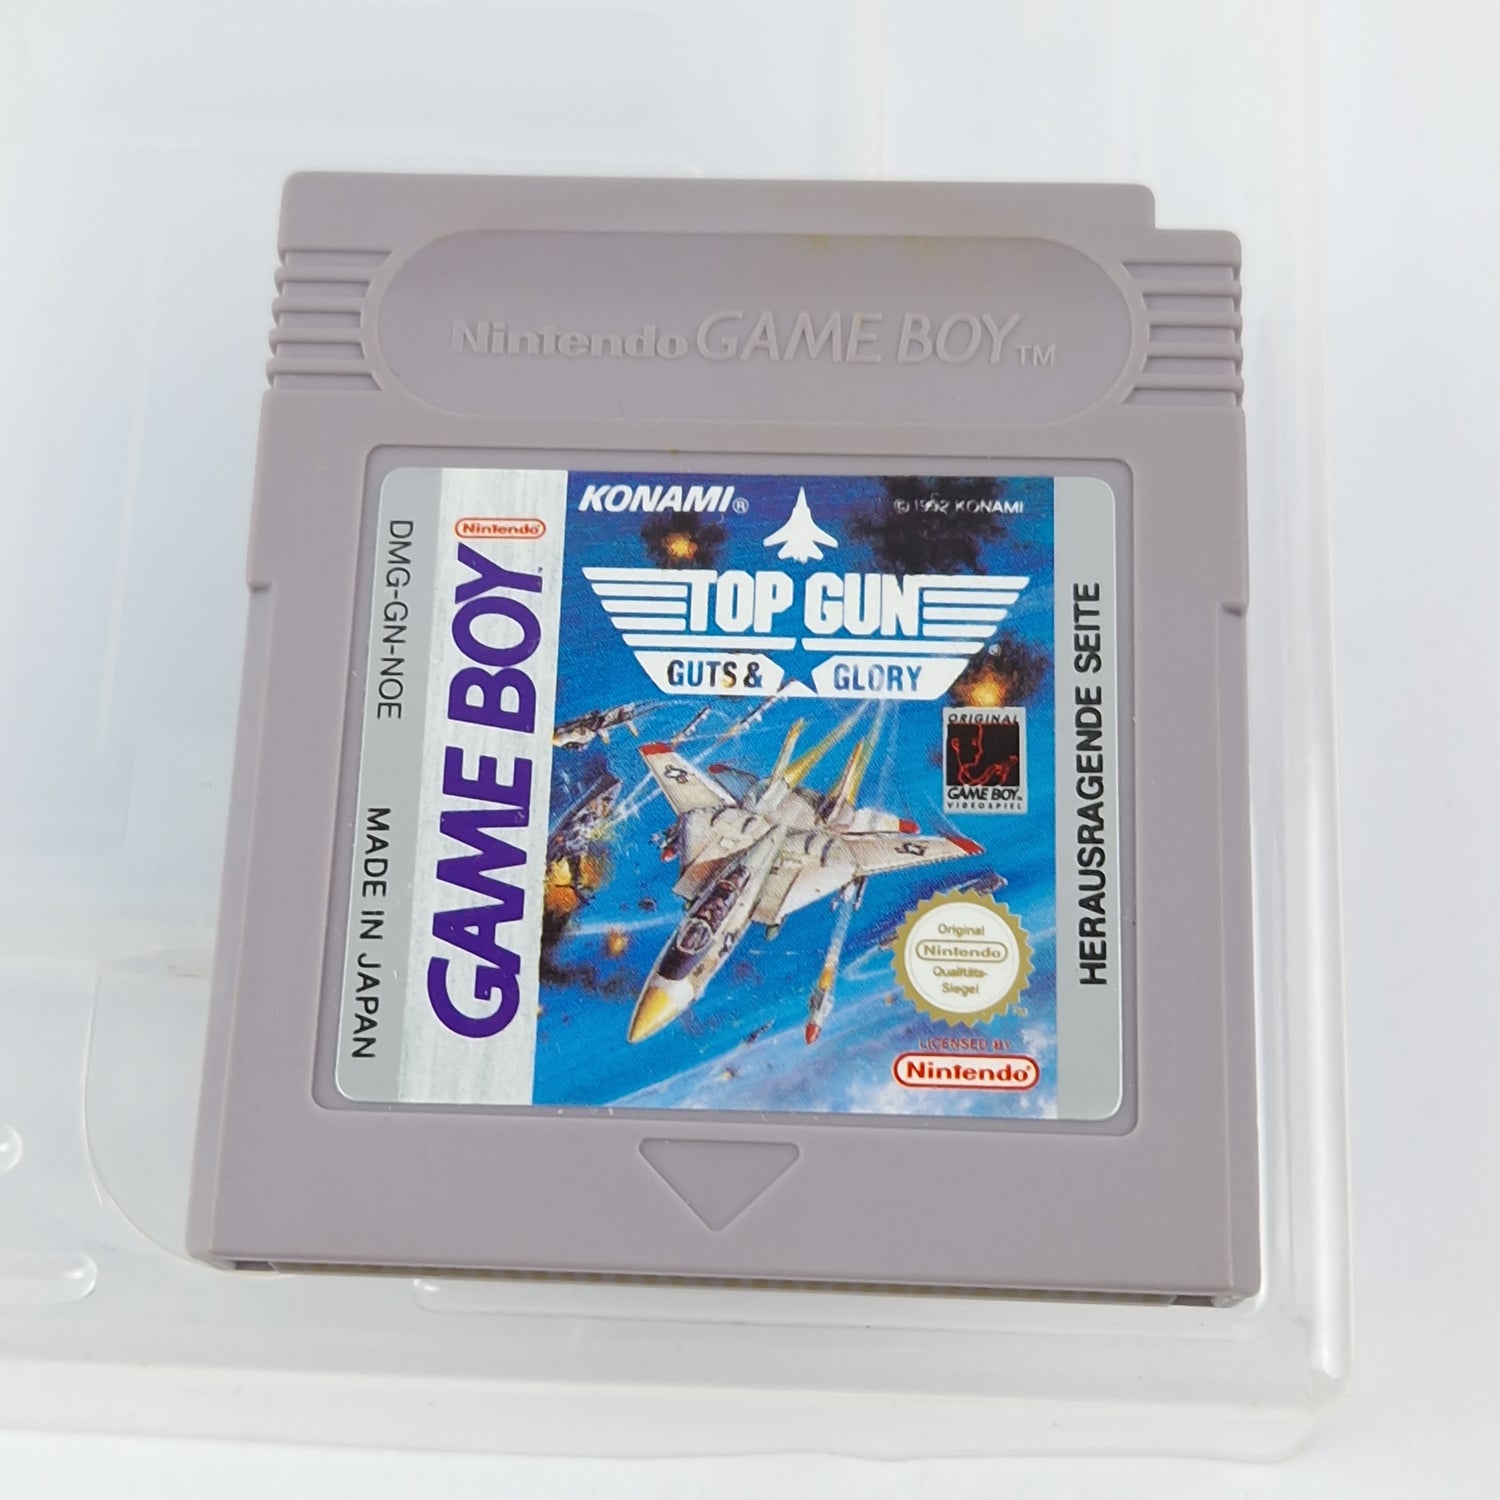 Nintendo Game Boy Spiel : Top Gun Guts & Glory - Modul Anleitung OVP cib GAMEBOY